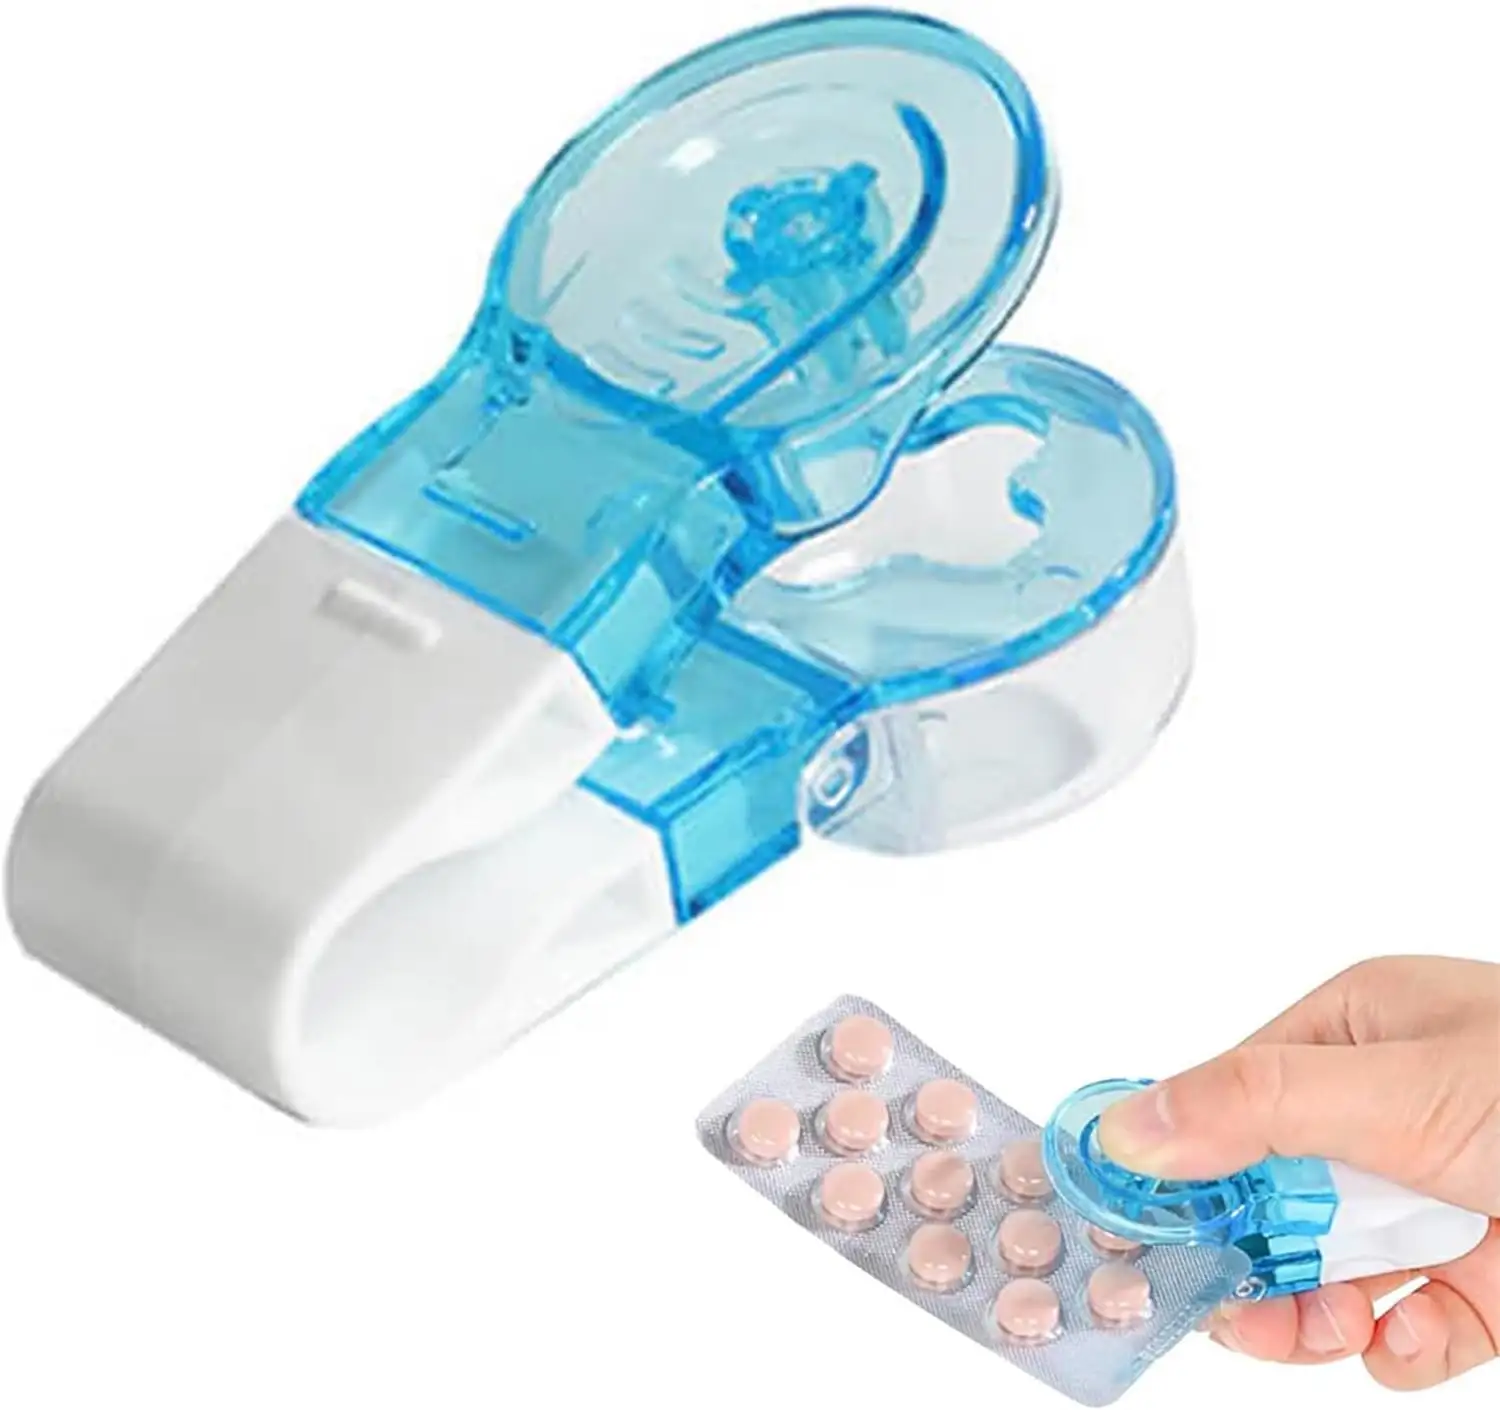 Pocket Pill Box Pills Dispenser - Easy to Take Out Pills for Elderly with Weak Hands